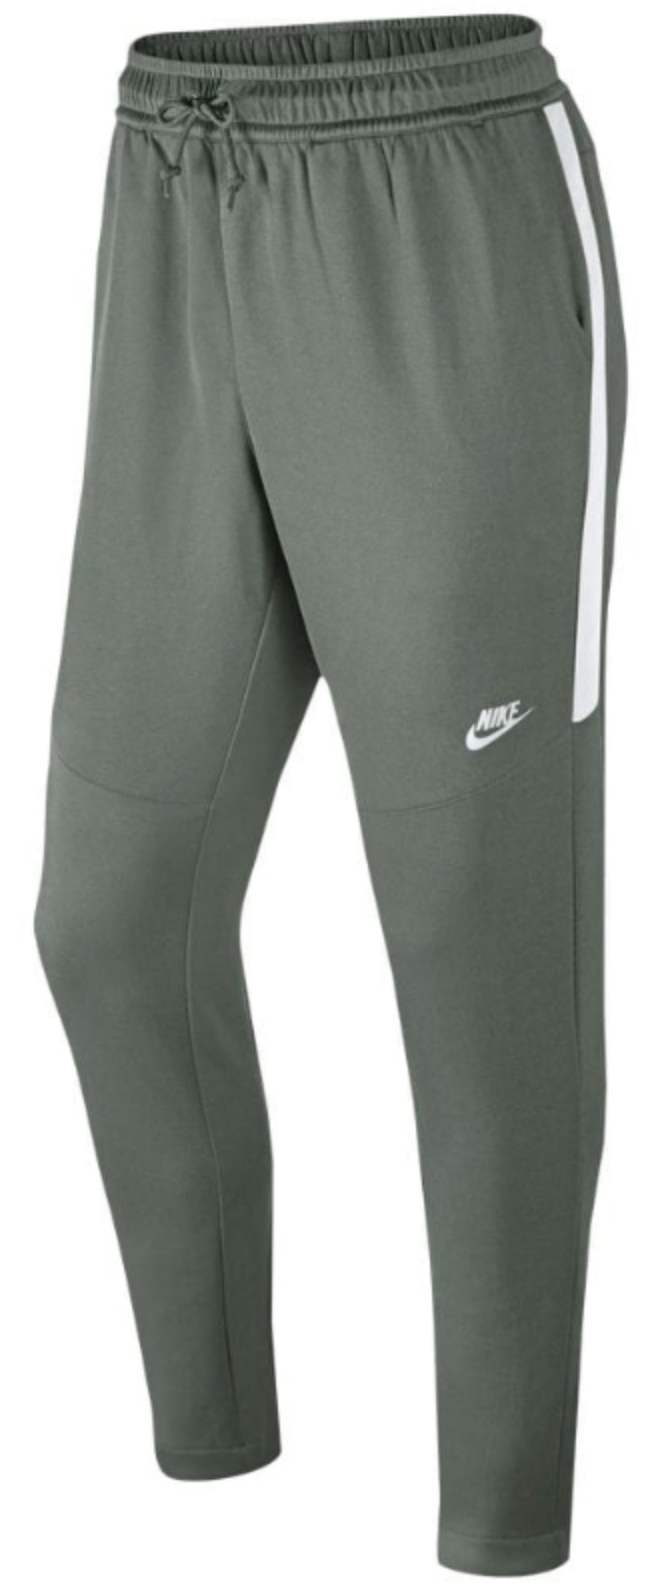 Nike Air Plus Olive Orange and Clothing | SportFits.com